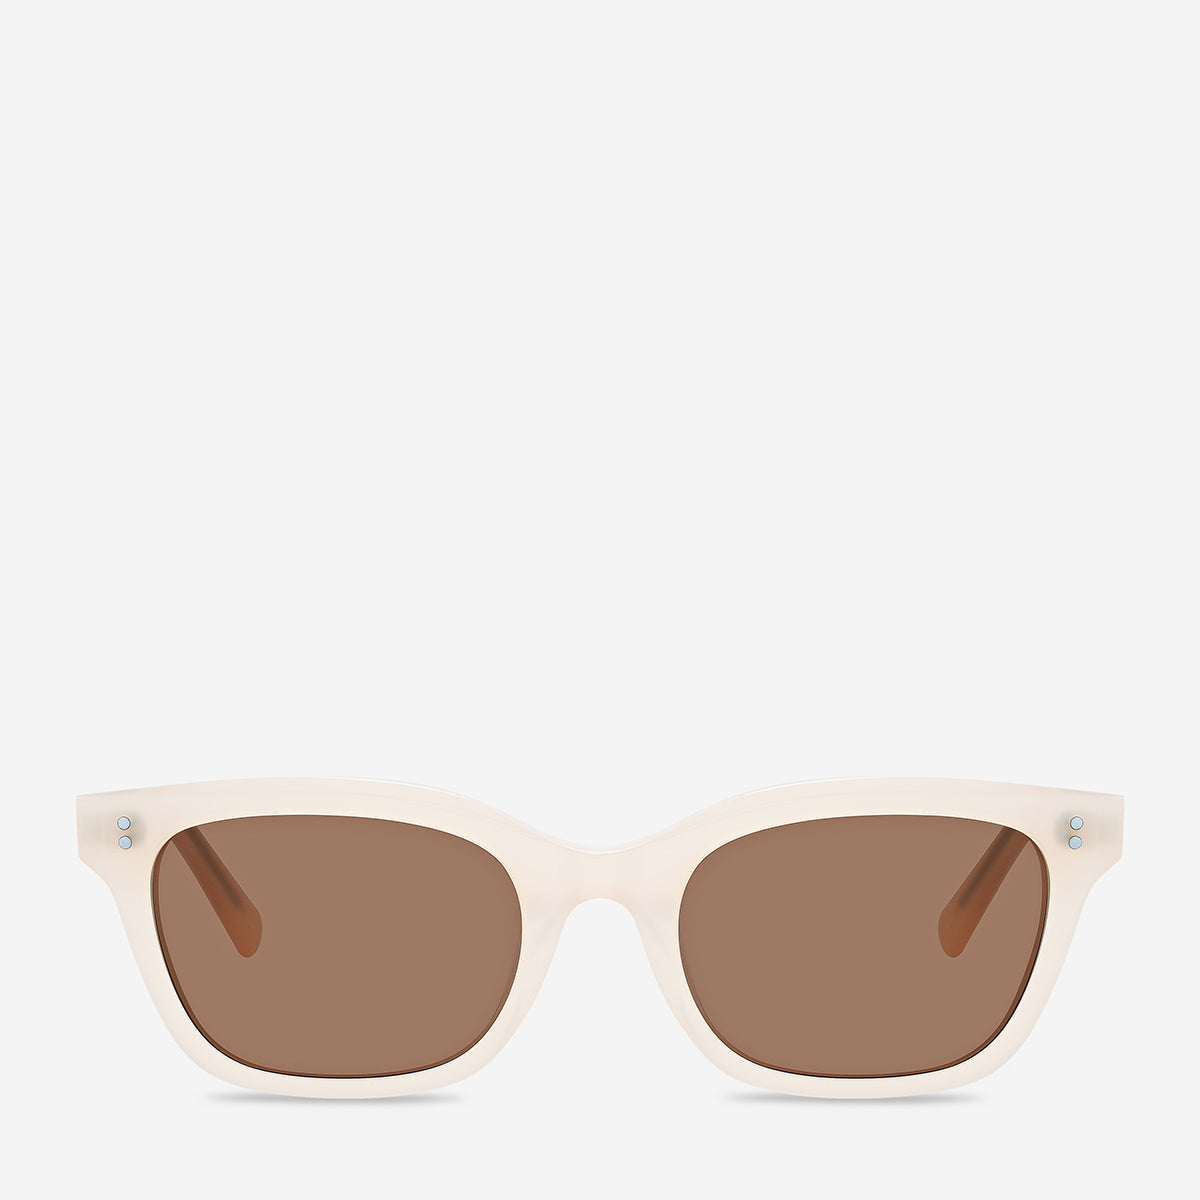 Transcendental - Unisex Polarised Sunglasses